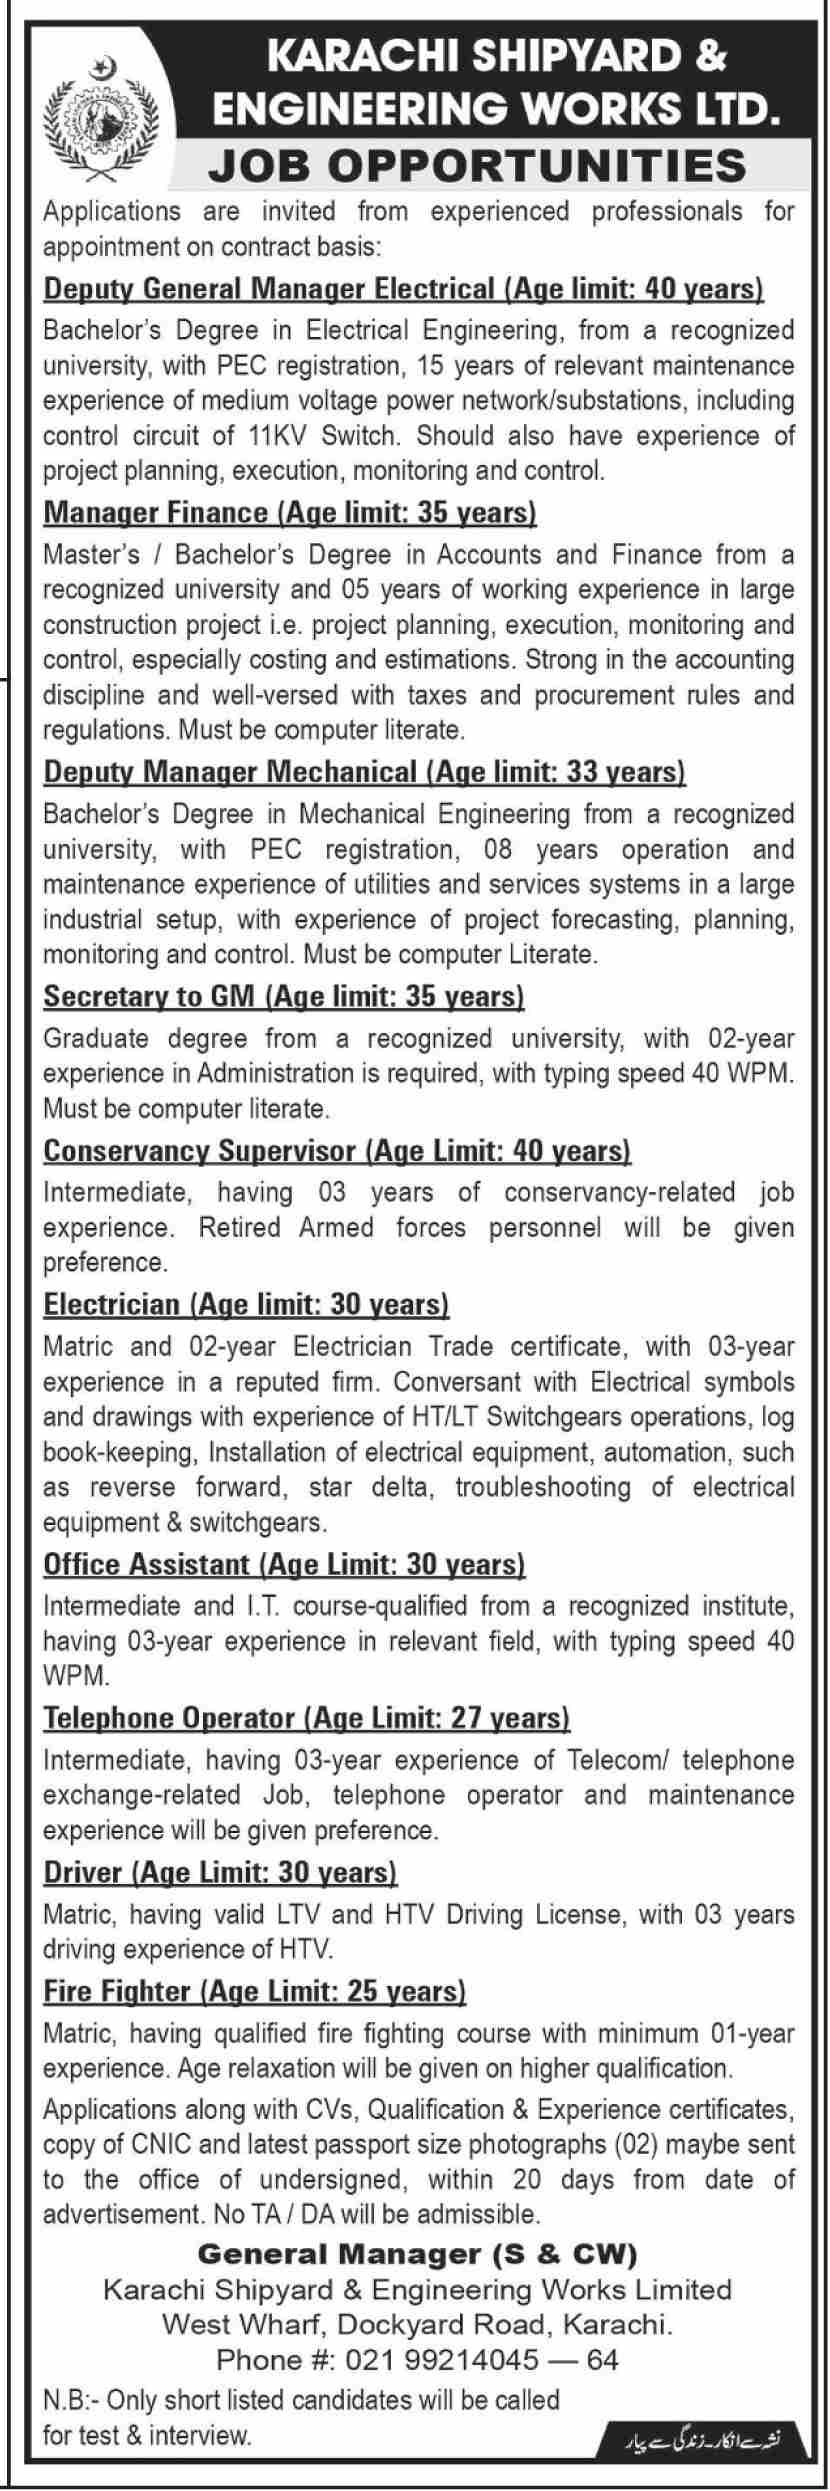 Karachi Shipyard and Engineering Works Limited jobs 2019